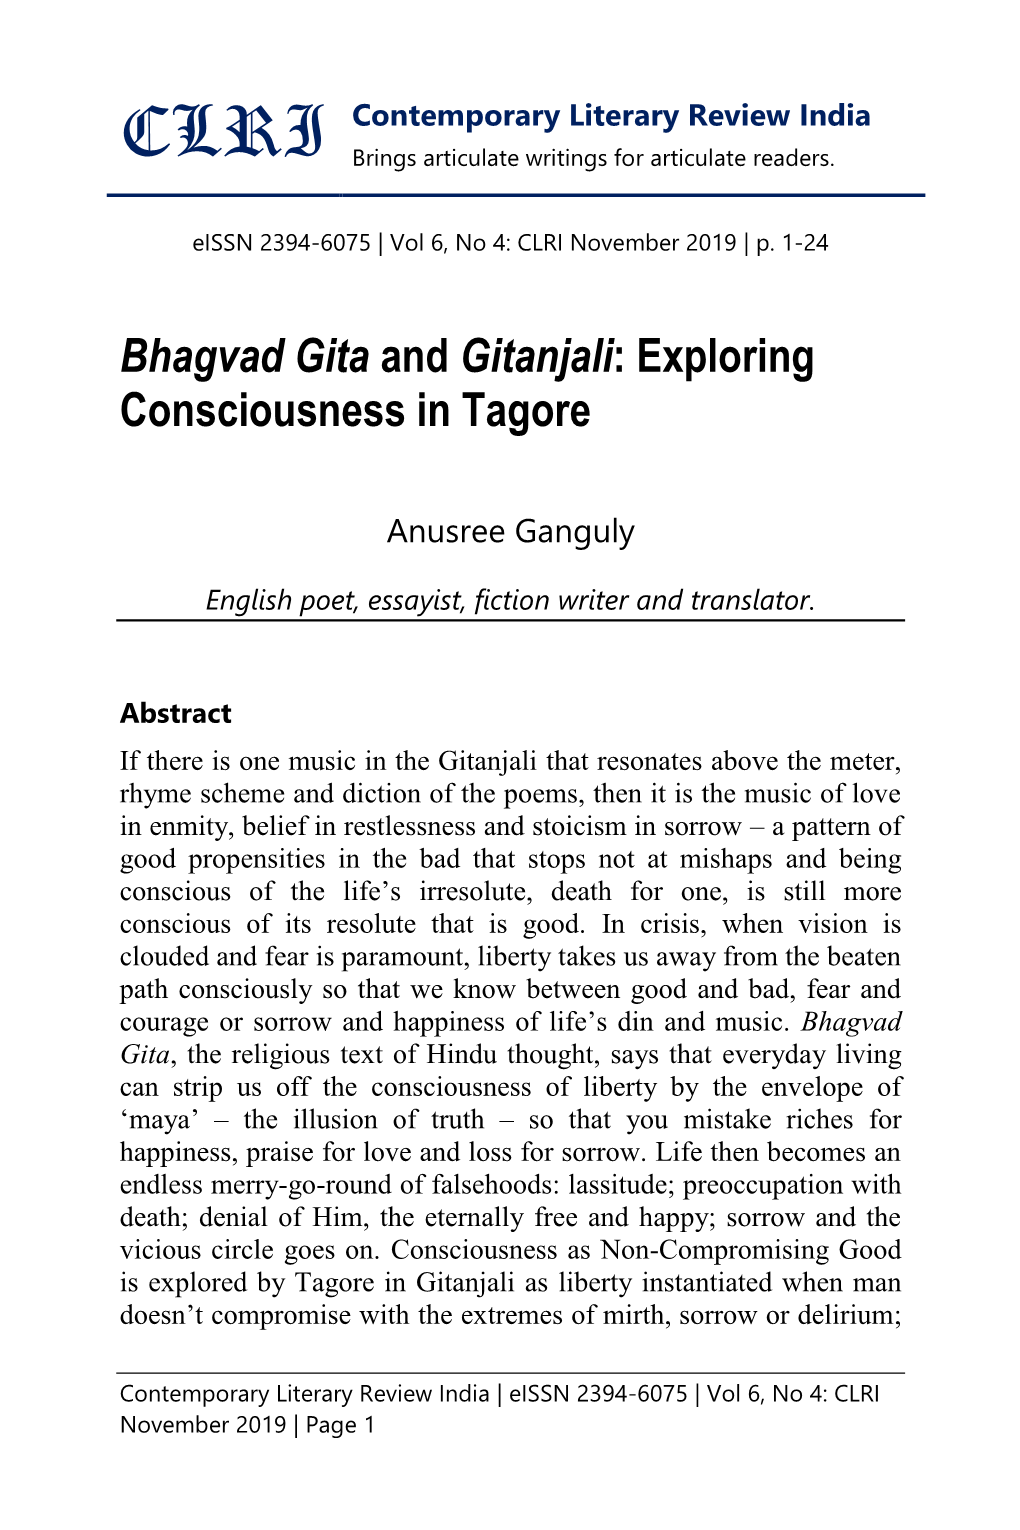 Bhagvad Gita and Gitanjali: Exploring Consciousness in Tagore